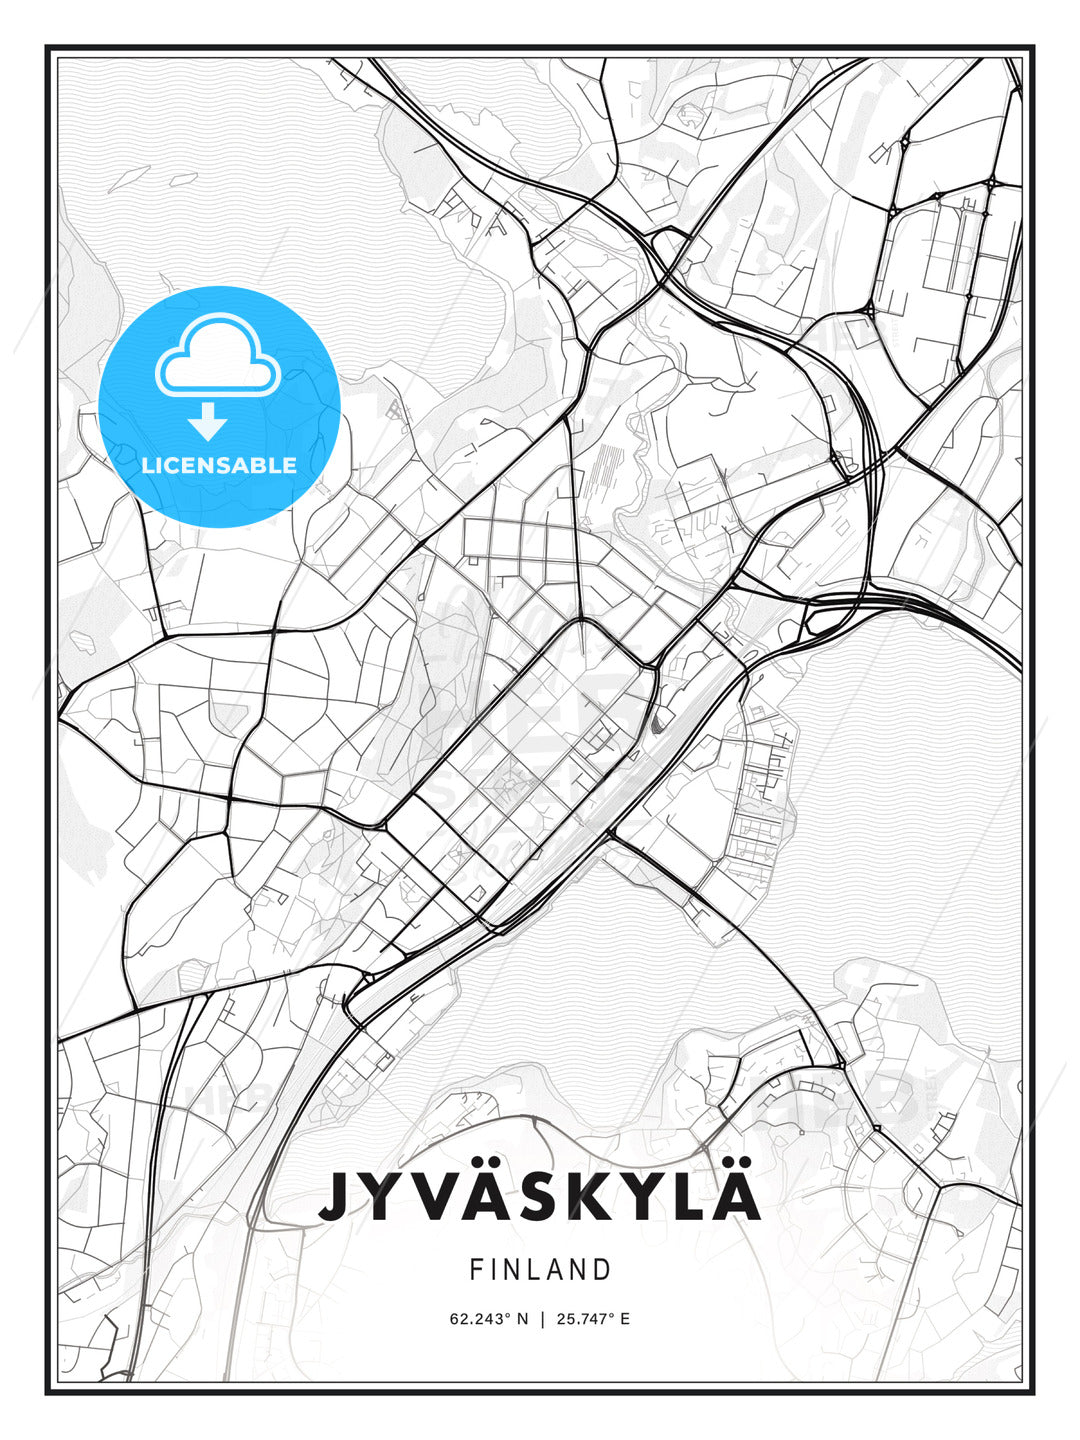 Jyväskylä, Finland, Modern Print Template in Various Formats - HEBSTREITS Sketches